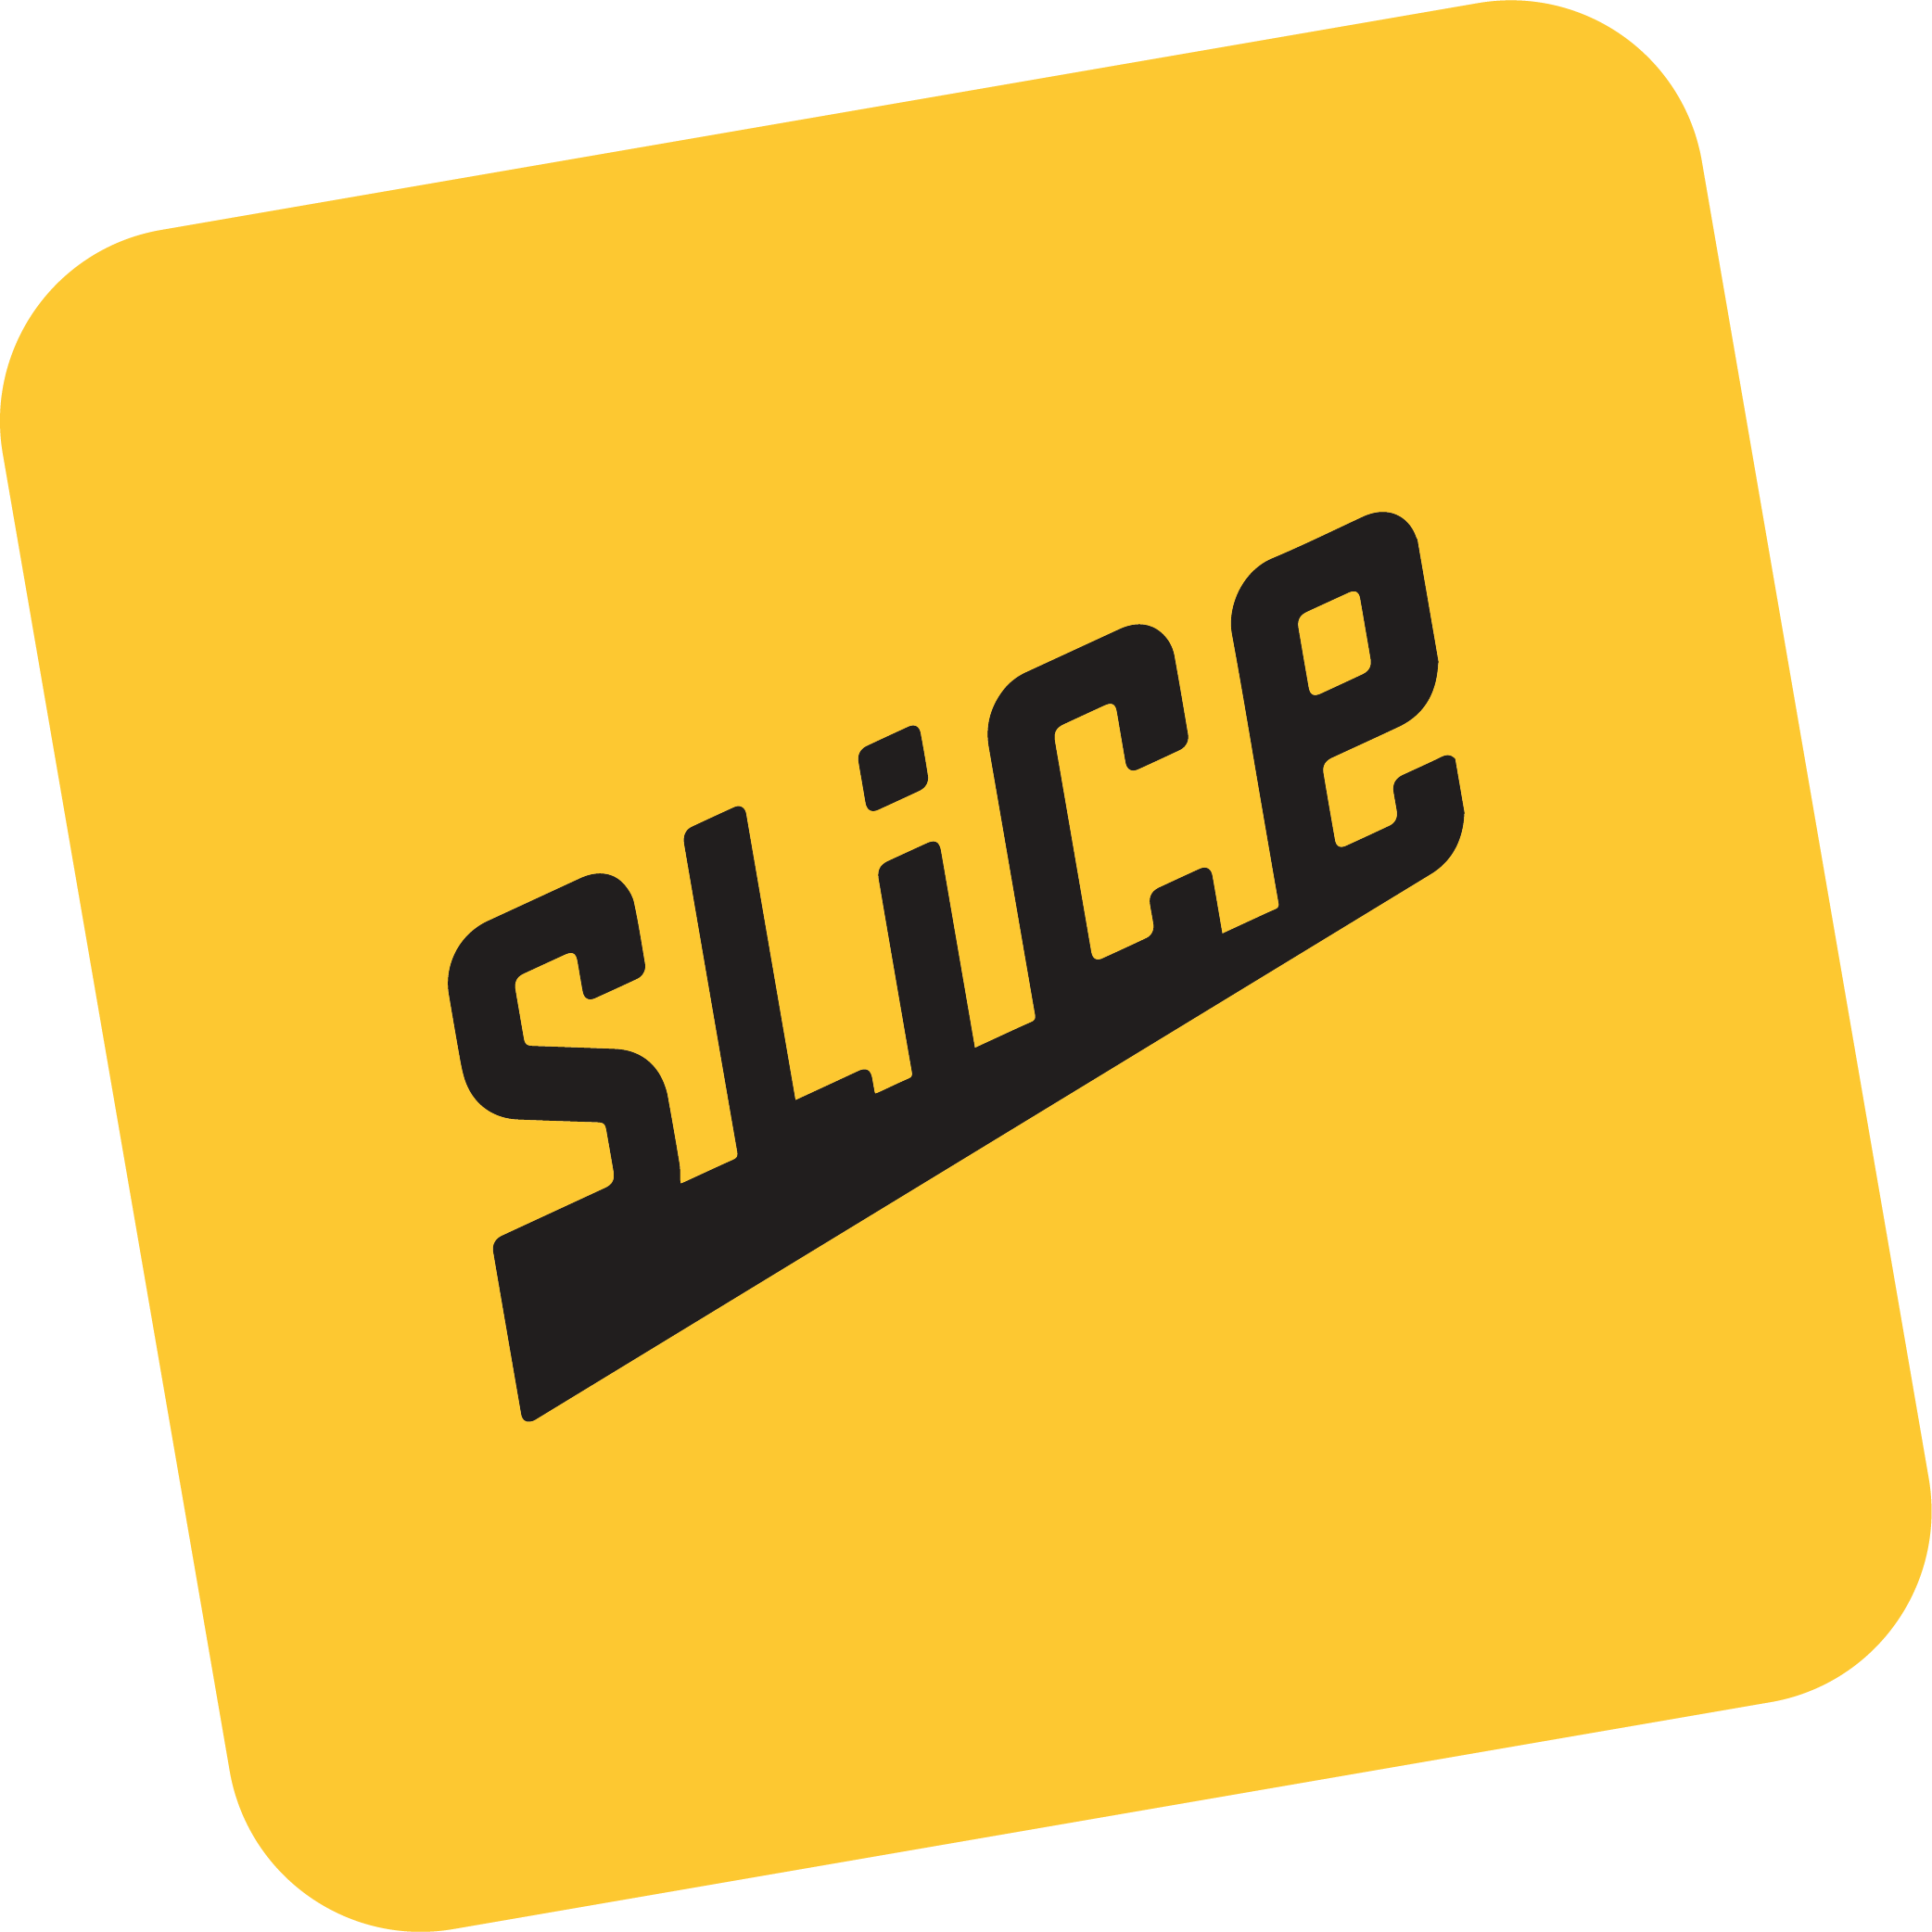 Order on Slice